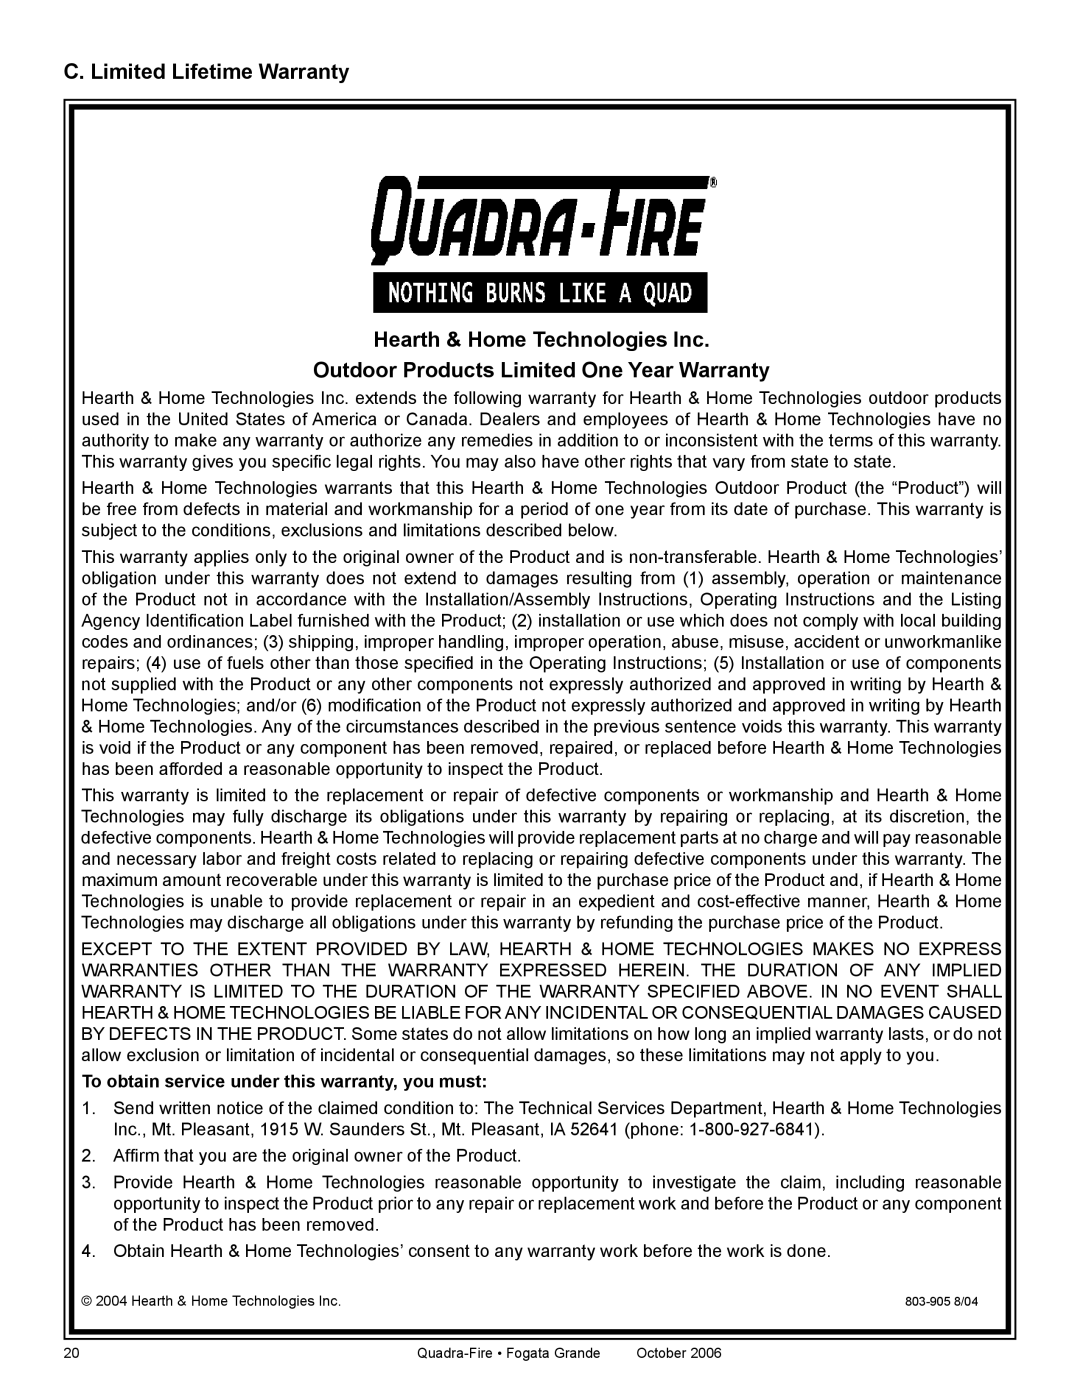 Quadra-Fire FG21SP-LP, FG21SP-NG owner manual C. Limited Lifetime Warranty, Hearth & Home Technologies Inc 